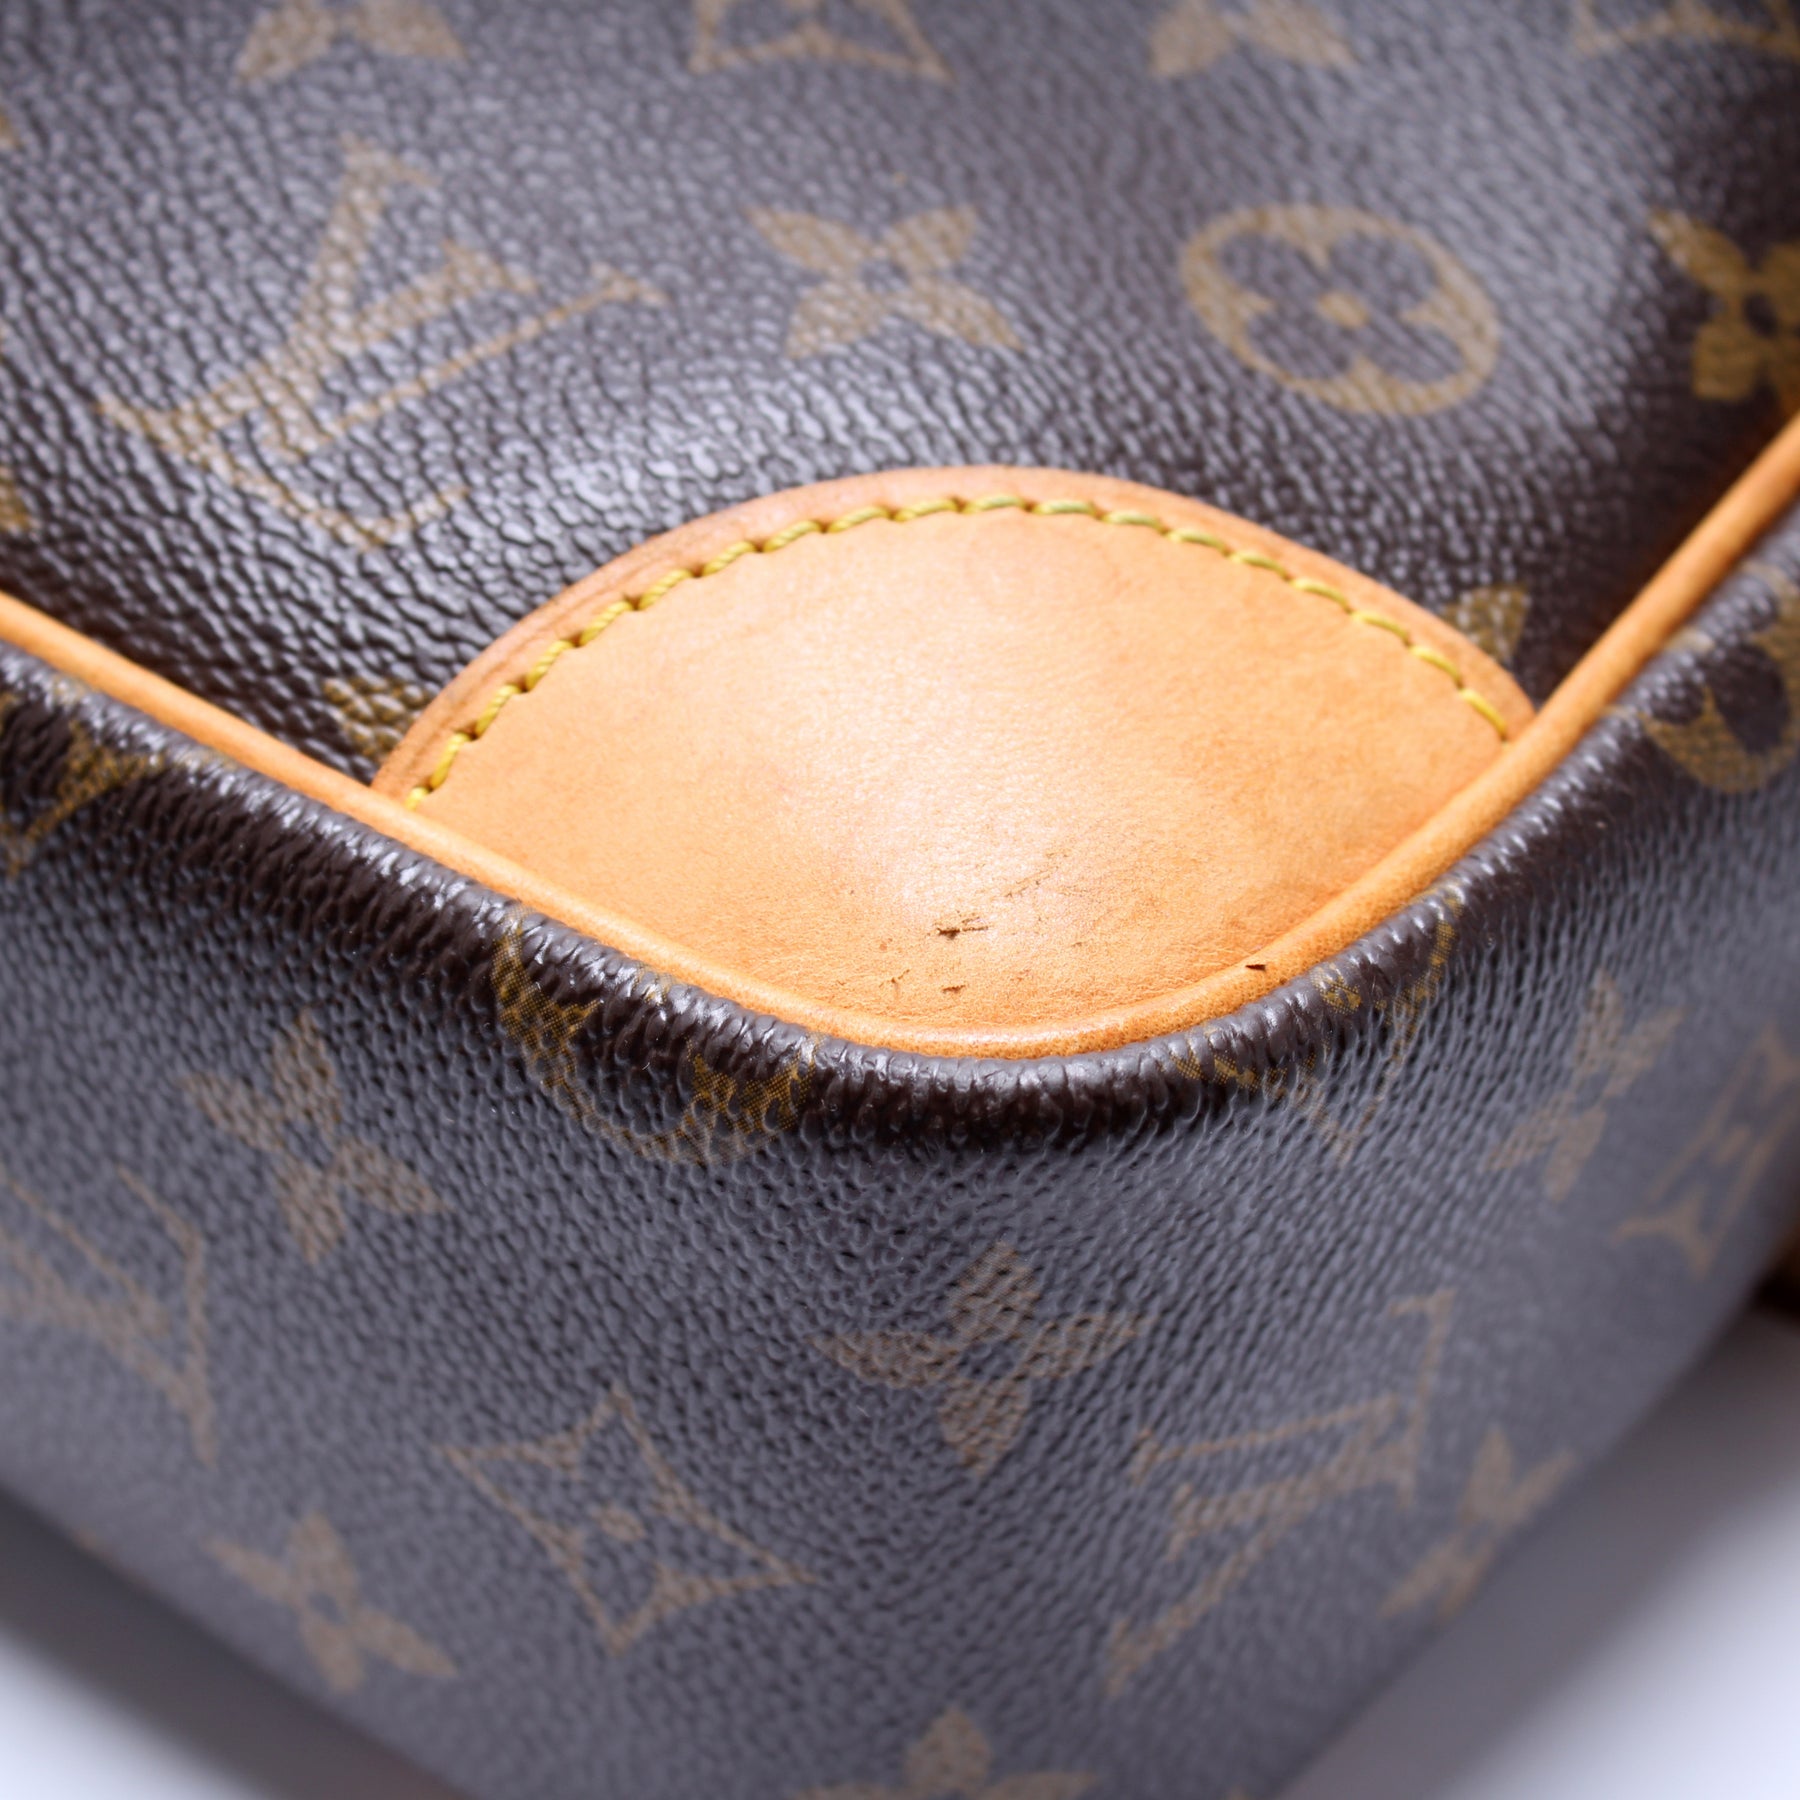 Trocadero 30 Monogram – Keeks Designer Handbags